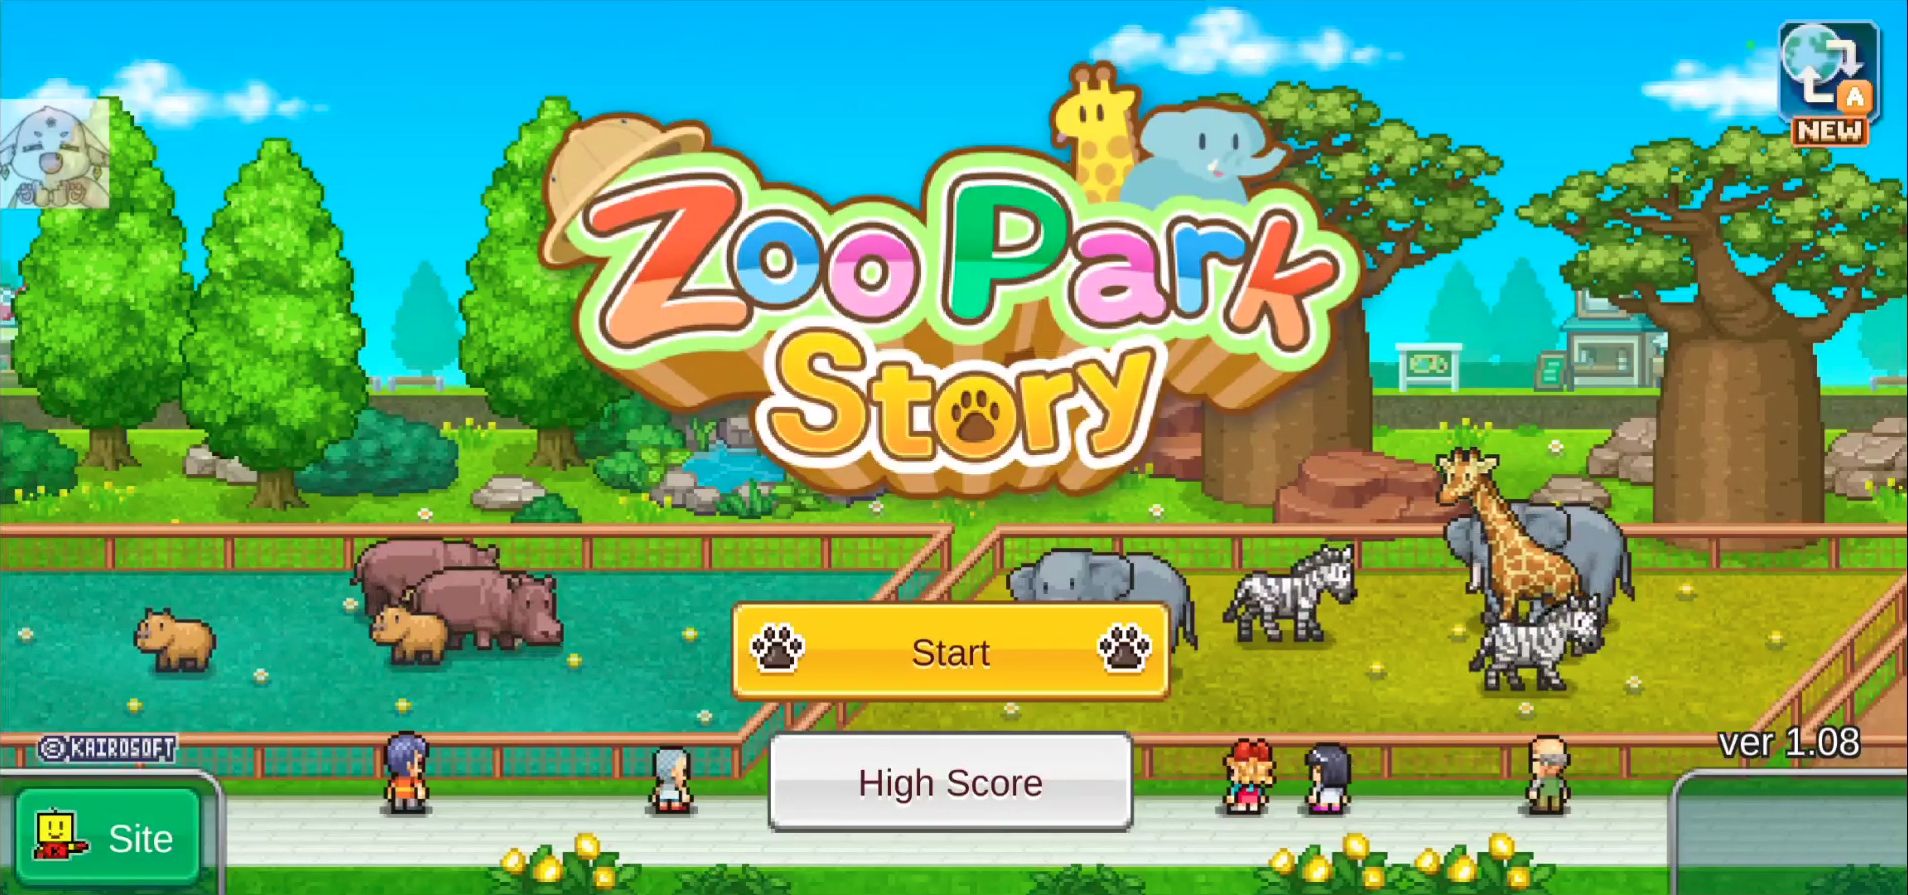 Descargar Zoo Park Story gratis para Android.